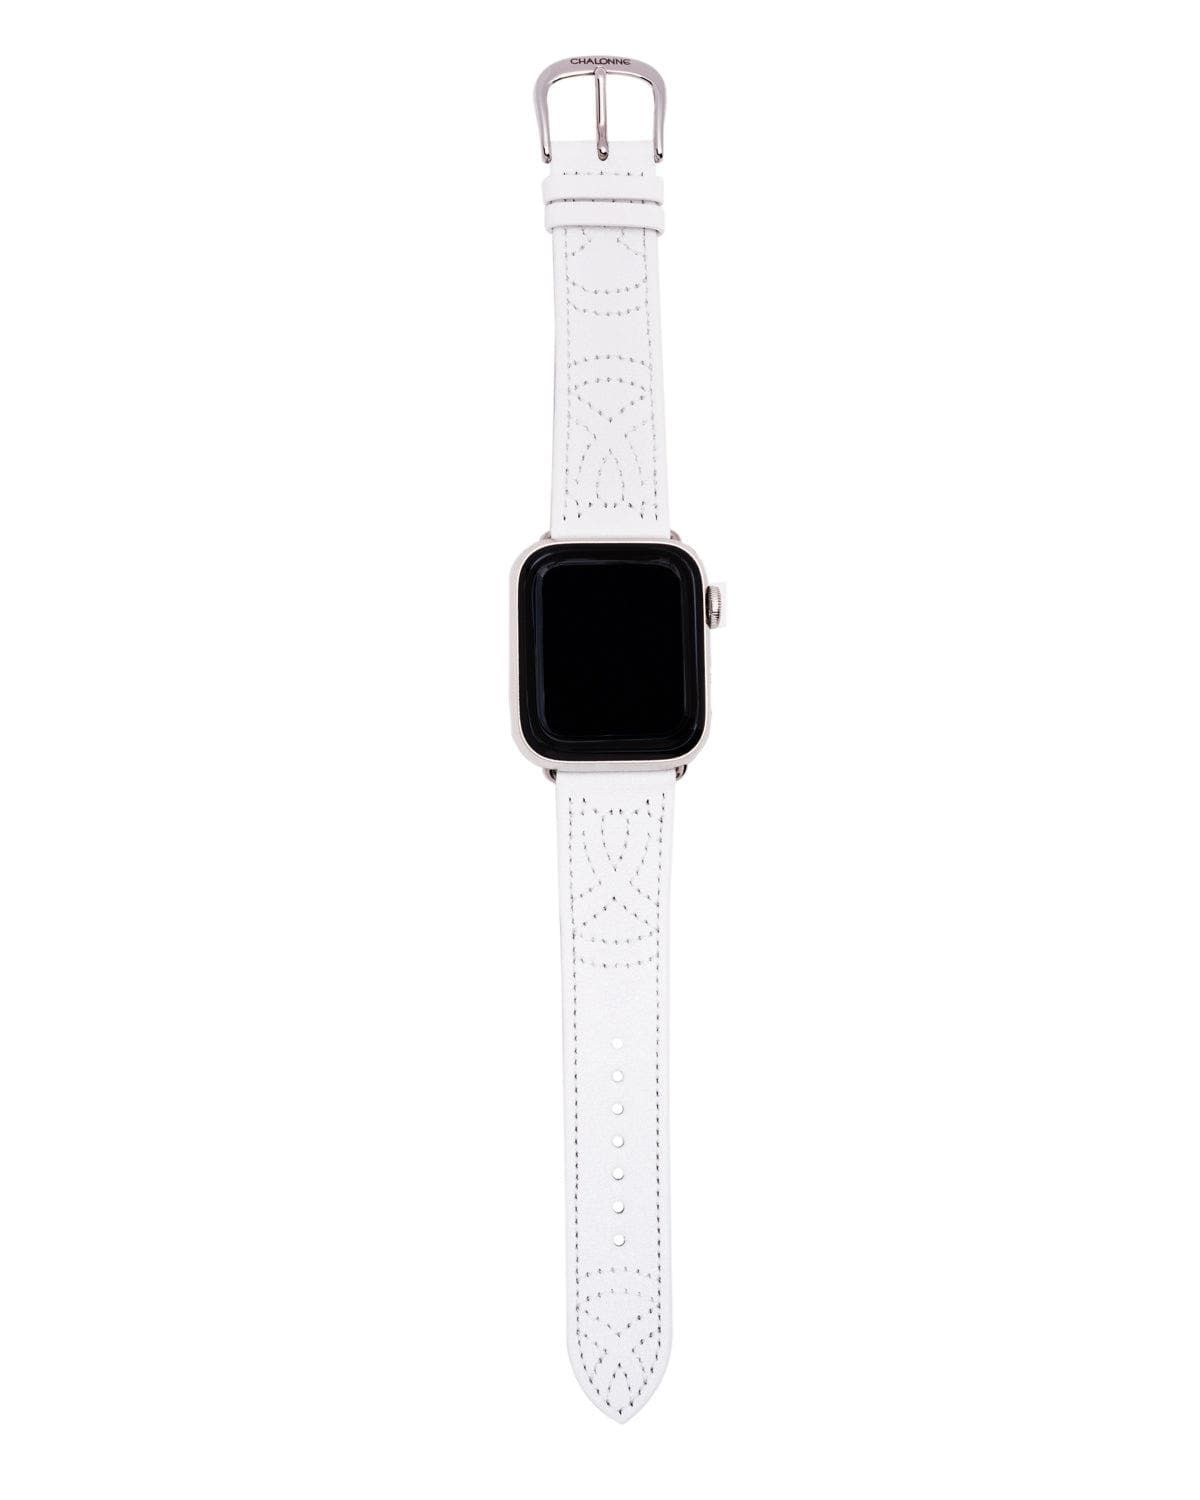 Sedona Watch Band in White